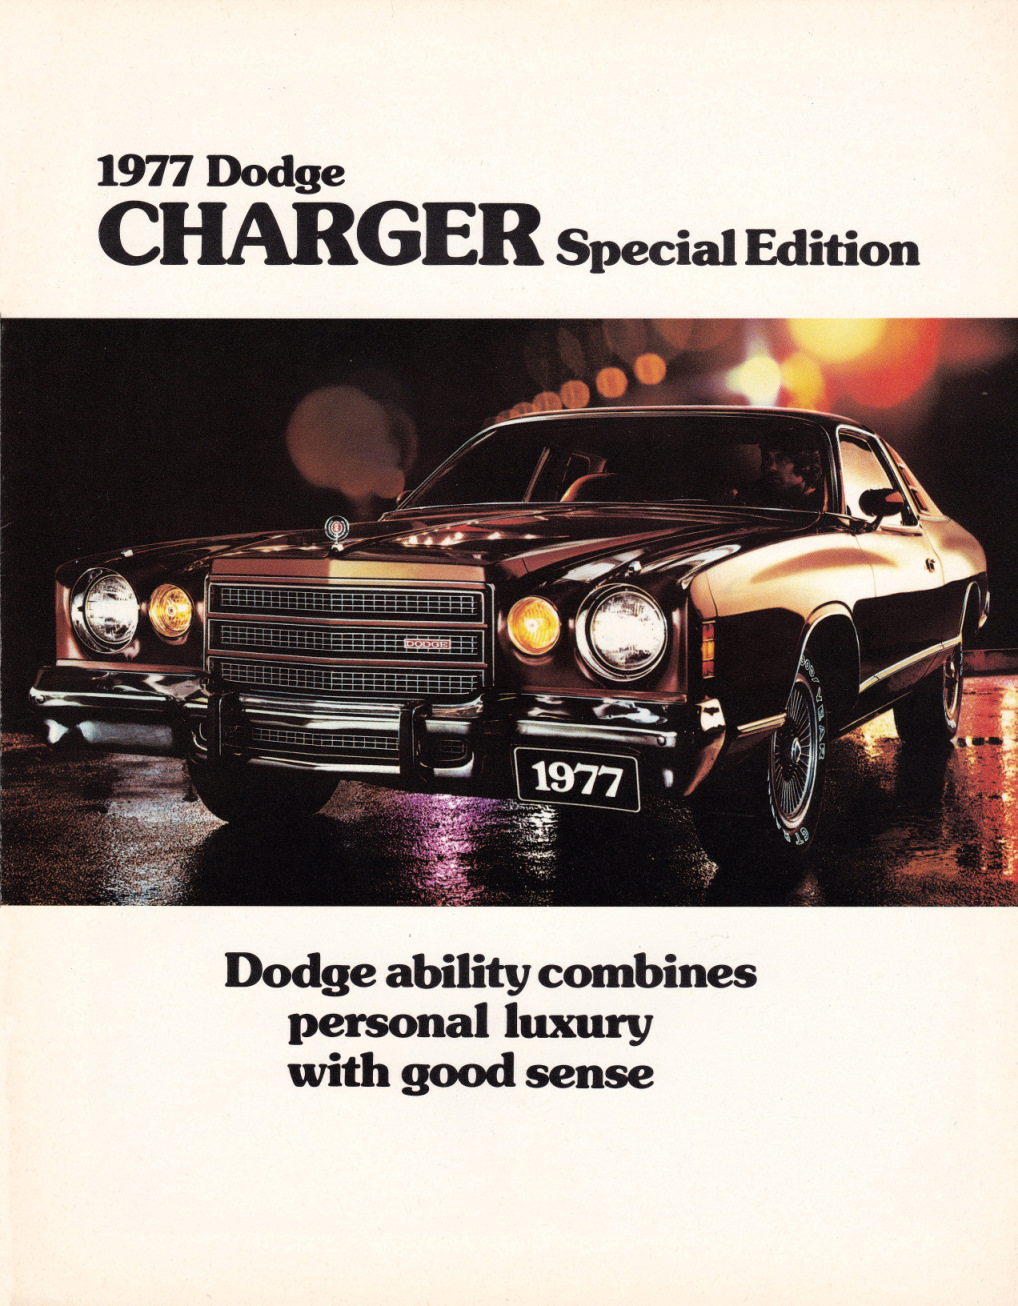 n_1977 Dodge Charger SE (Cdn)-01.jpg